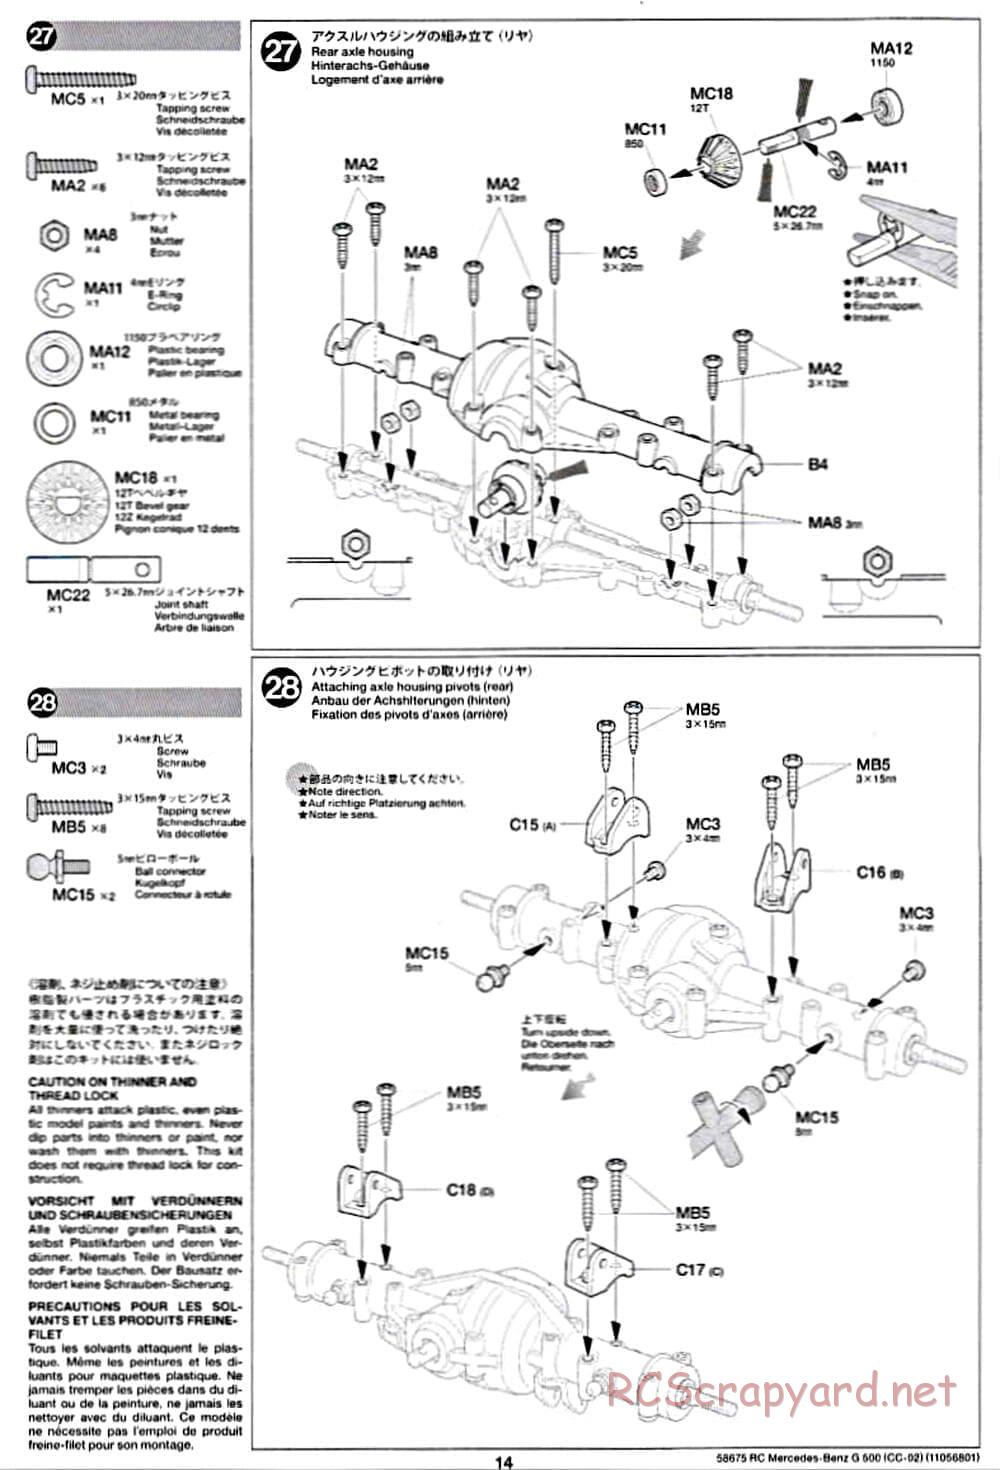 Tamiya - Mercedes-Benz G500 - CC-02 Chassis - Manual - Page 14